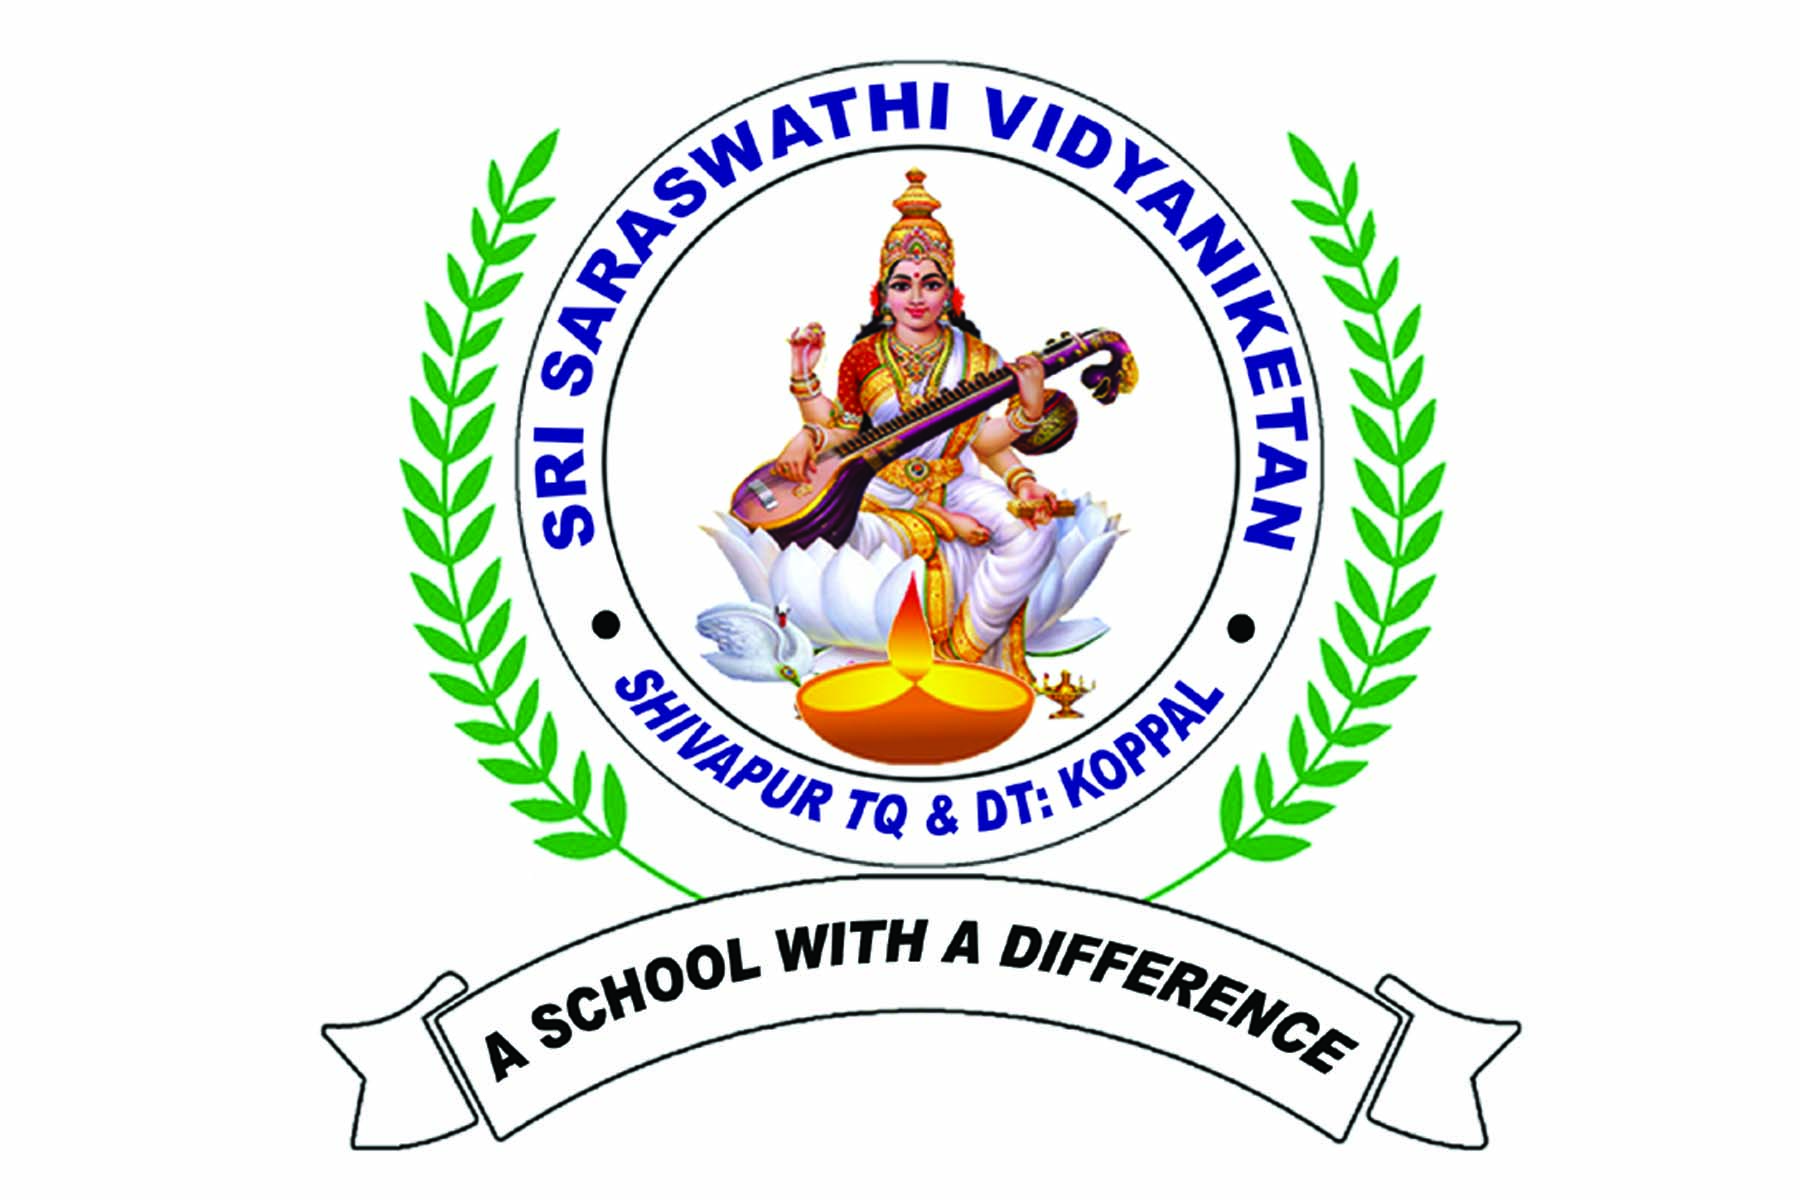 Sri Saraswathi Vidyaniketan School